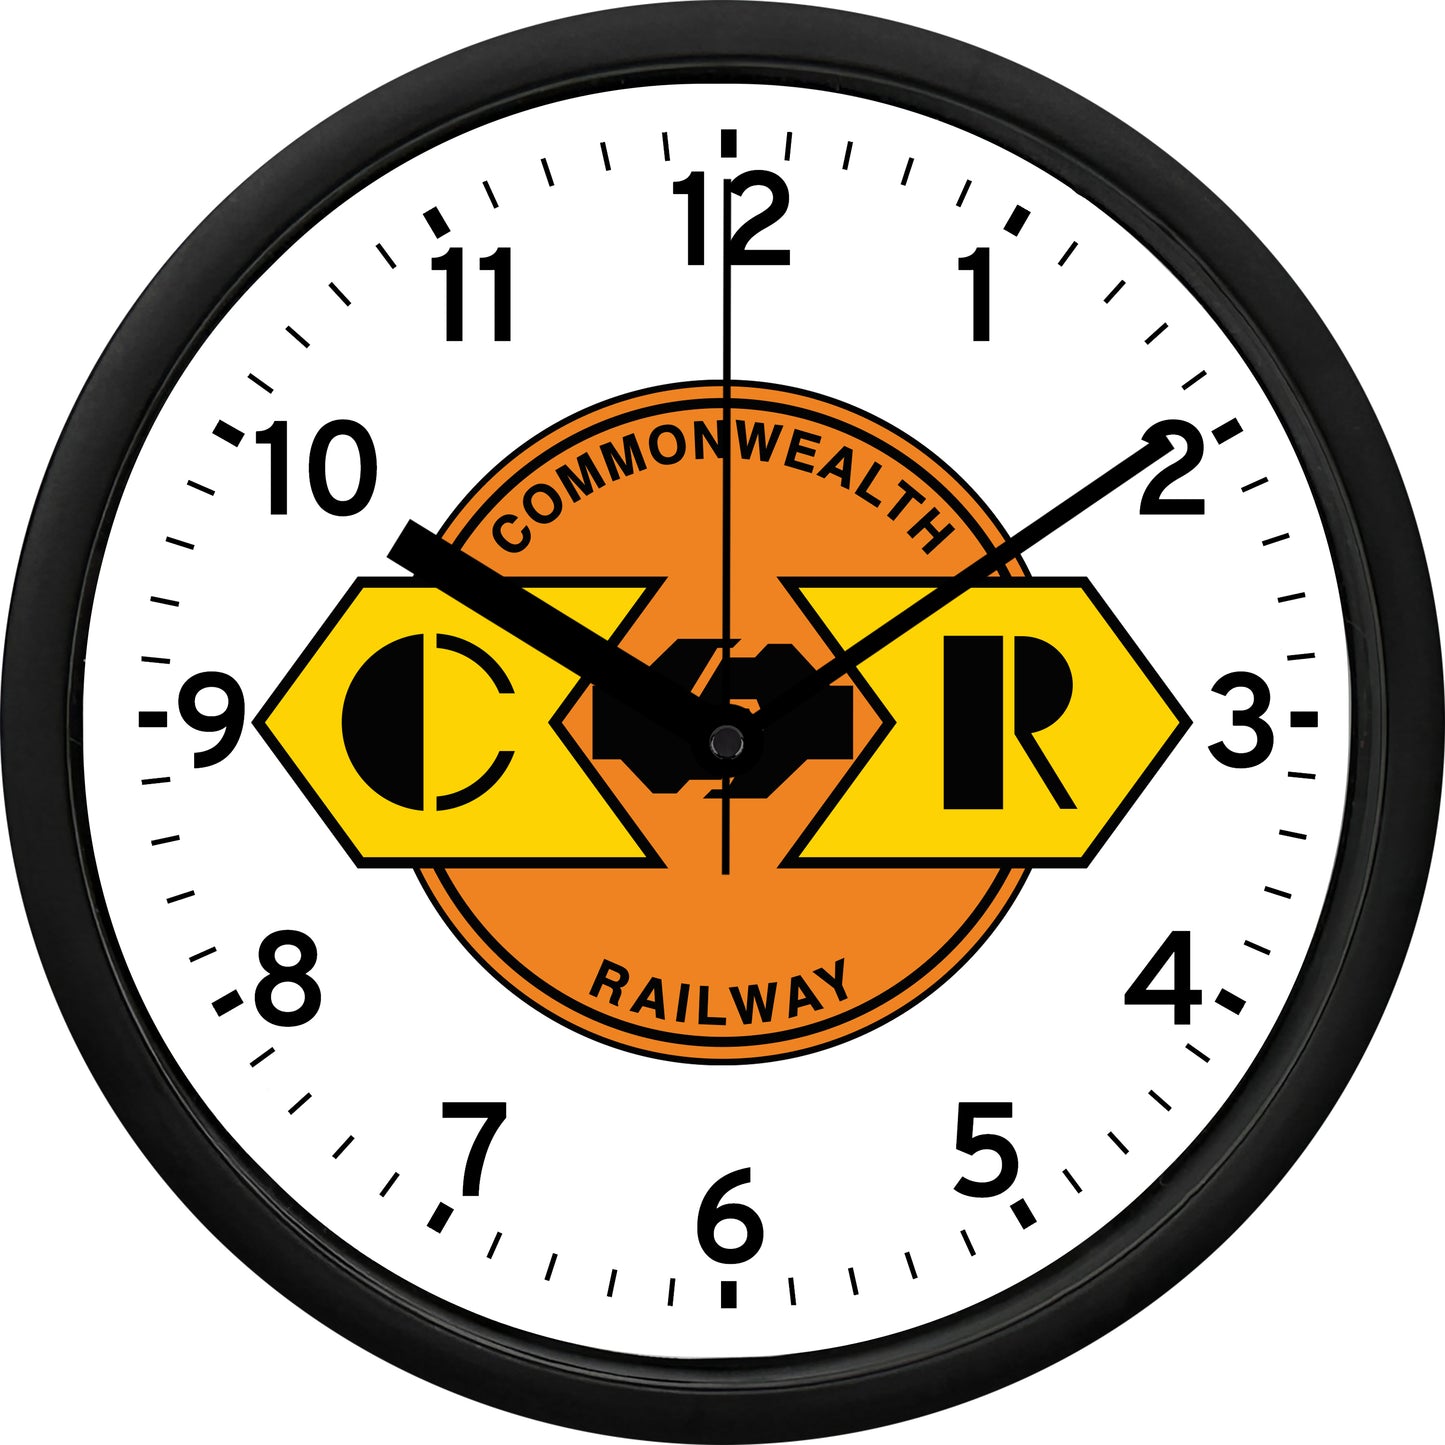 Commowealth Railway Wall Clock